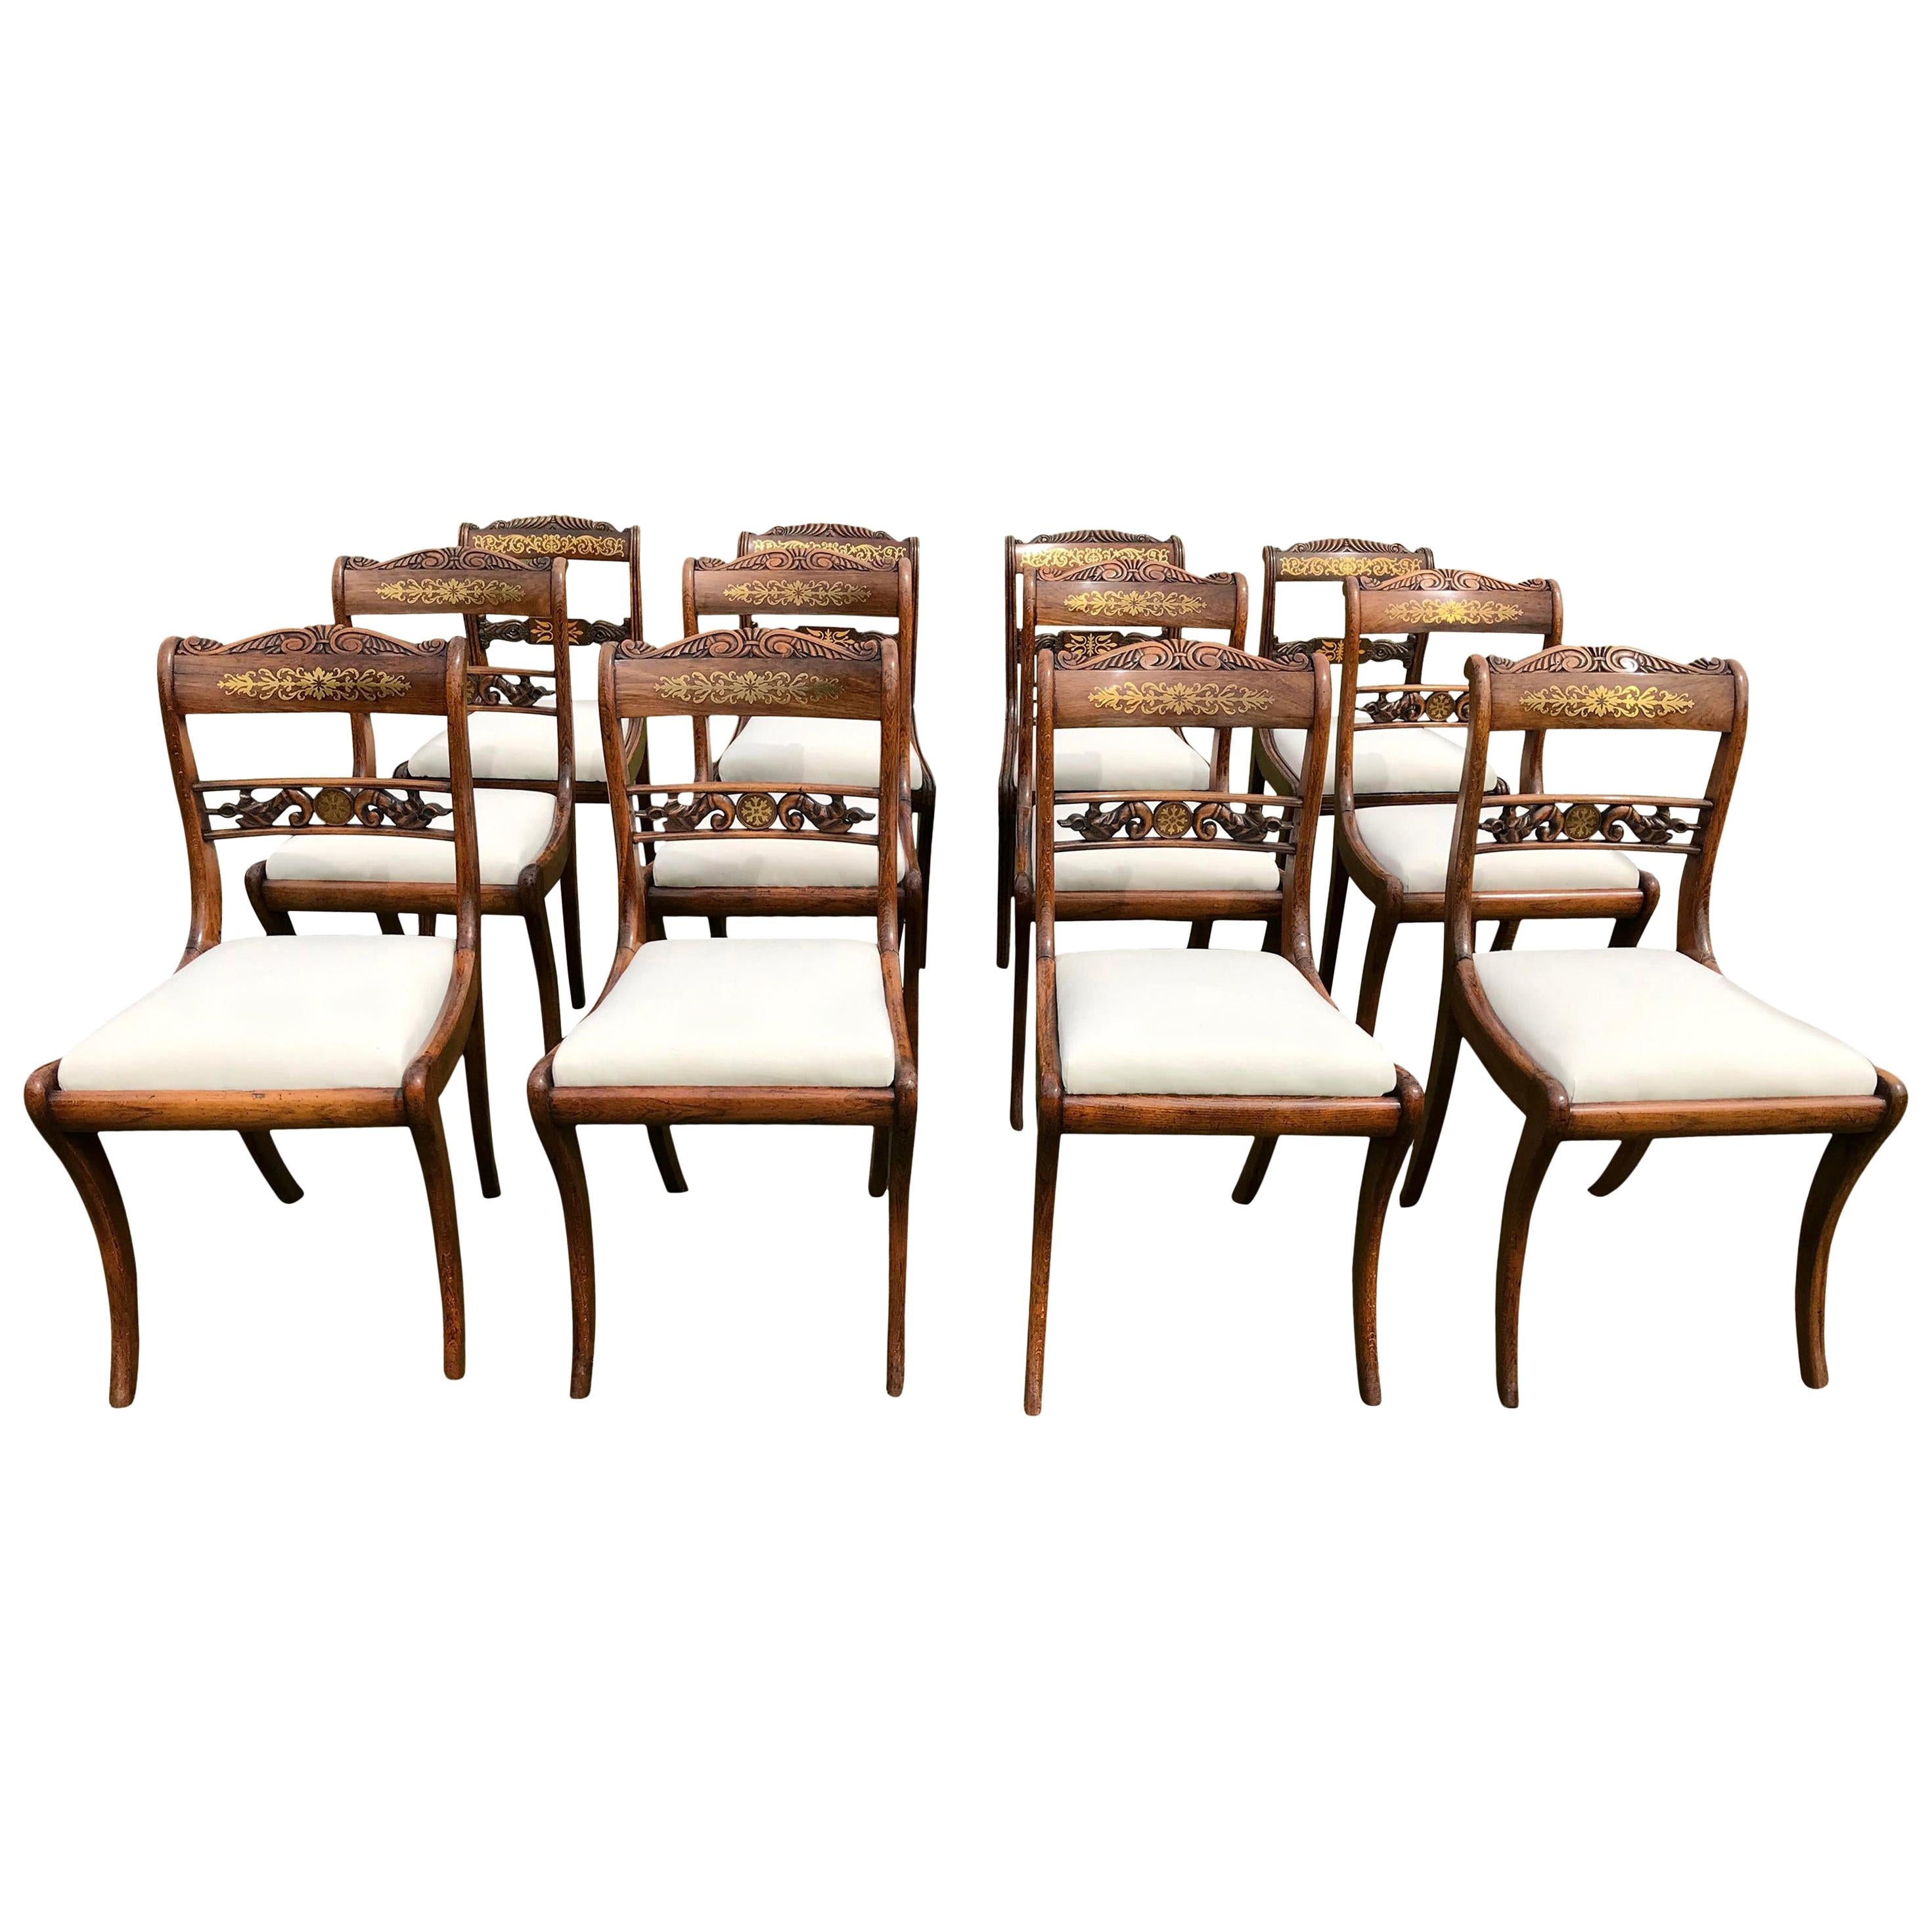 Twelve English Regency Period Brass Inlaid Dining Chairs